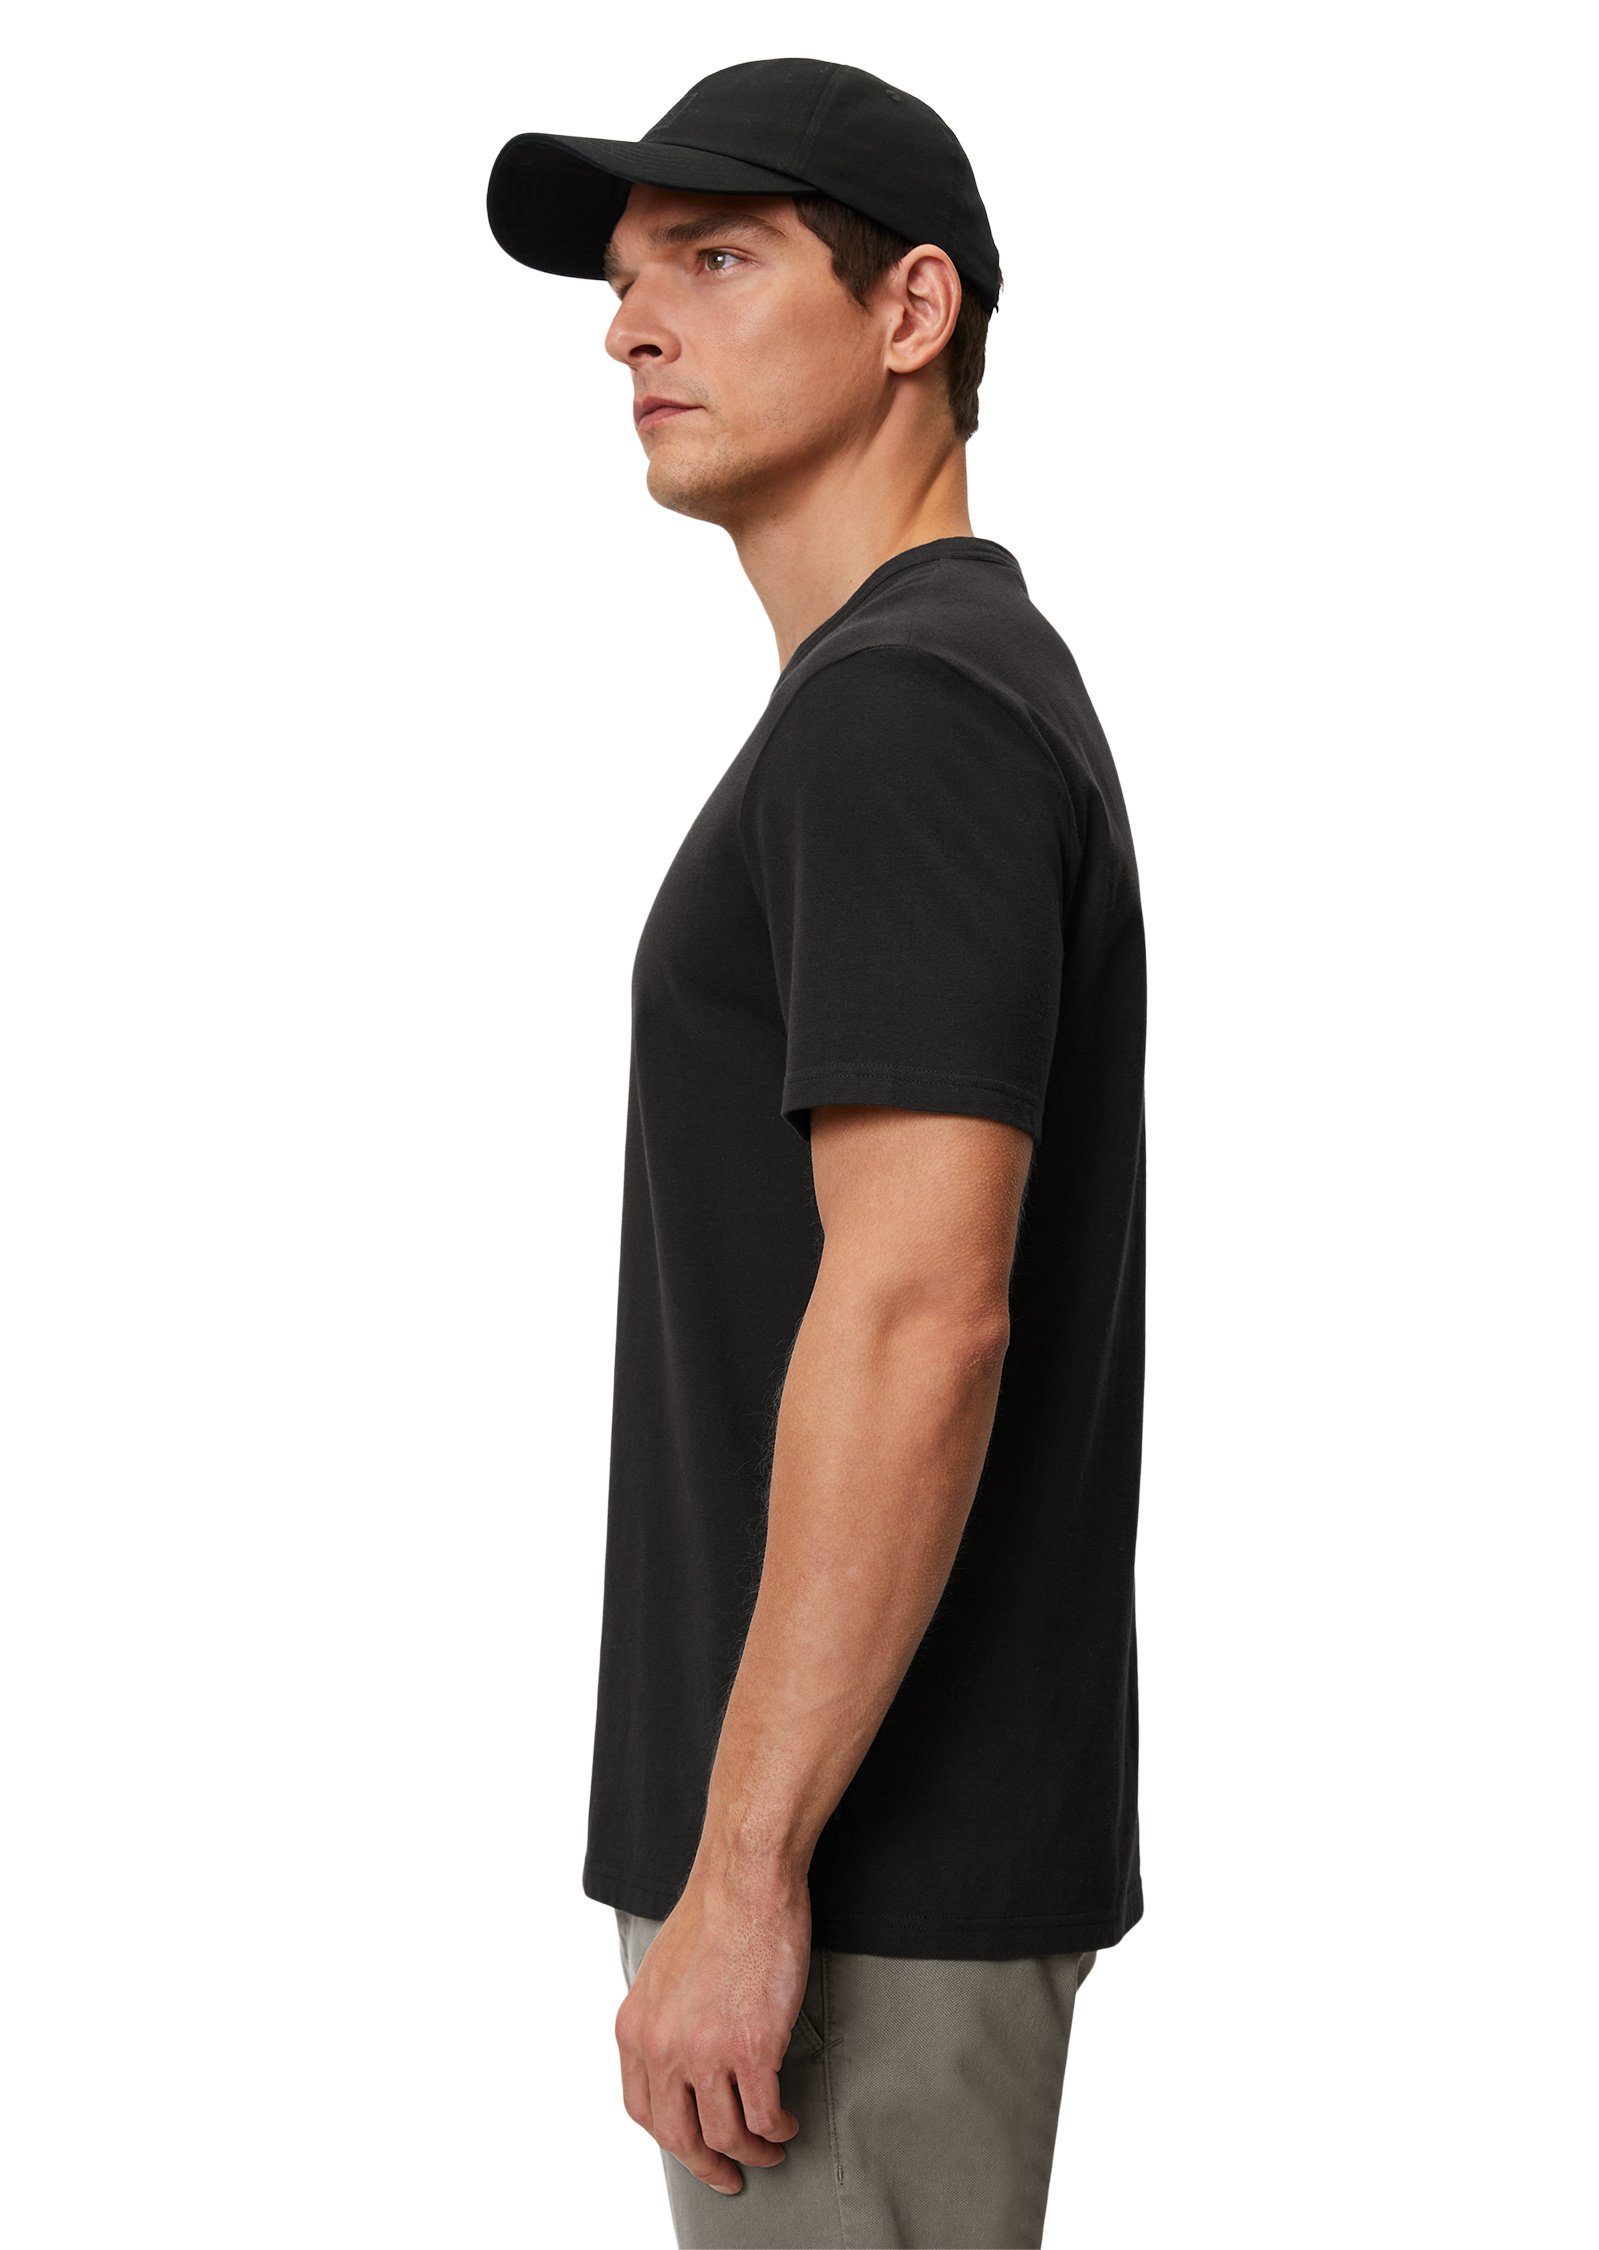 hochwertiger T-Shirt aus Marc O'Polo Baumwolle schwarz